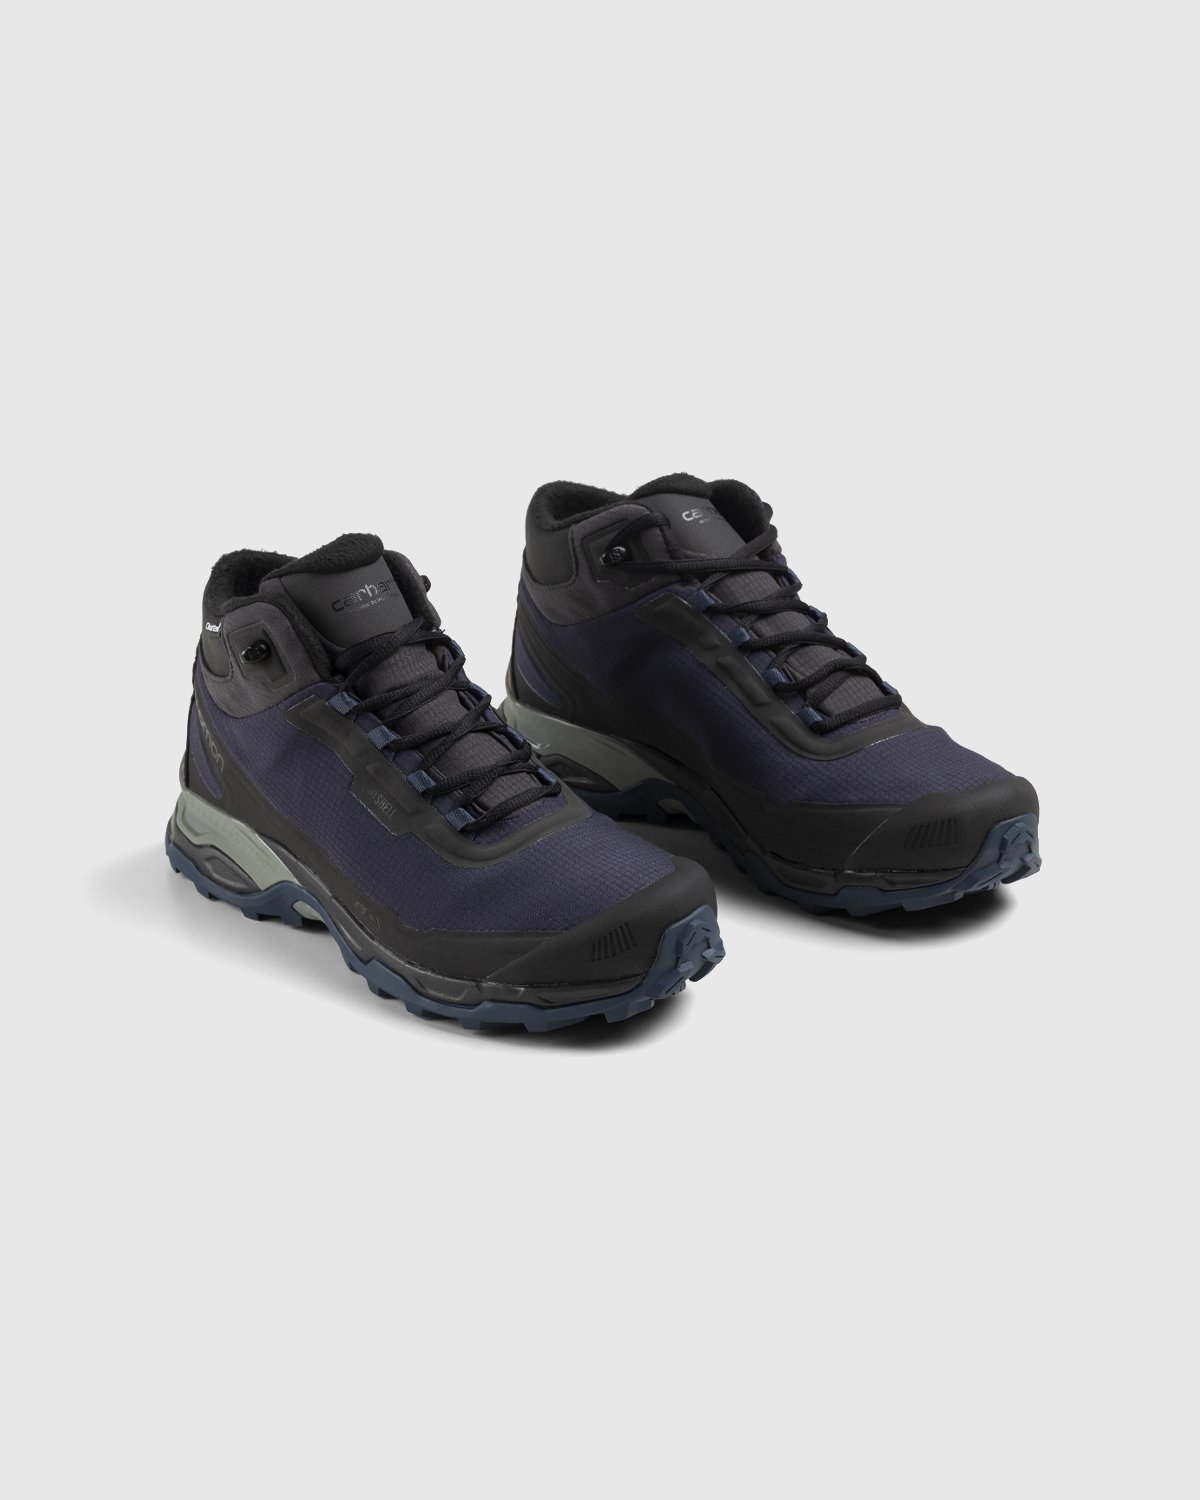 Carhartt WIP x Salomon - Shelter CSWP Black - Footwear - Black - Image 3